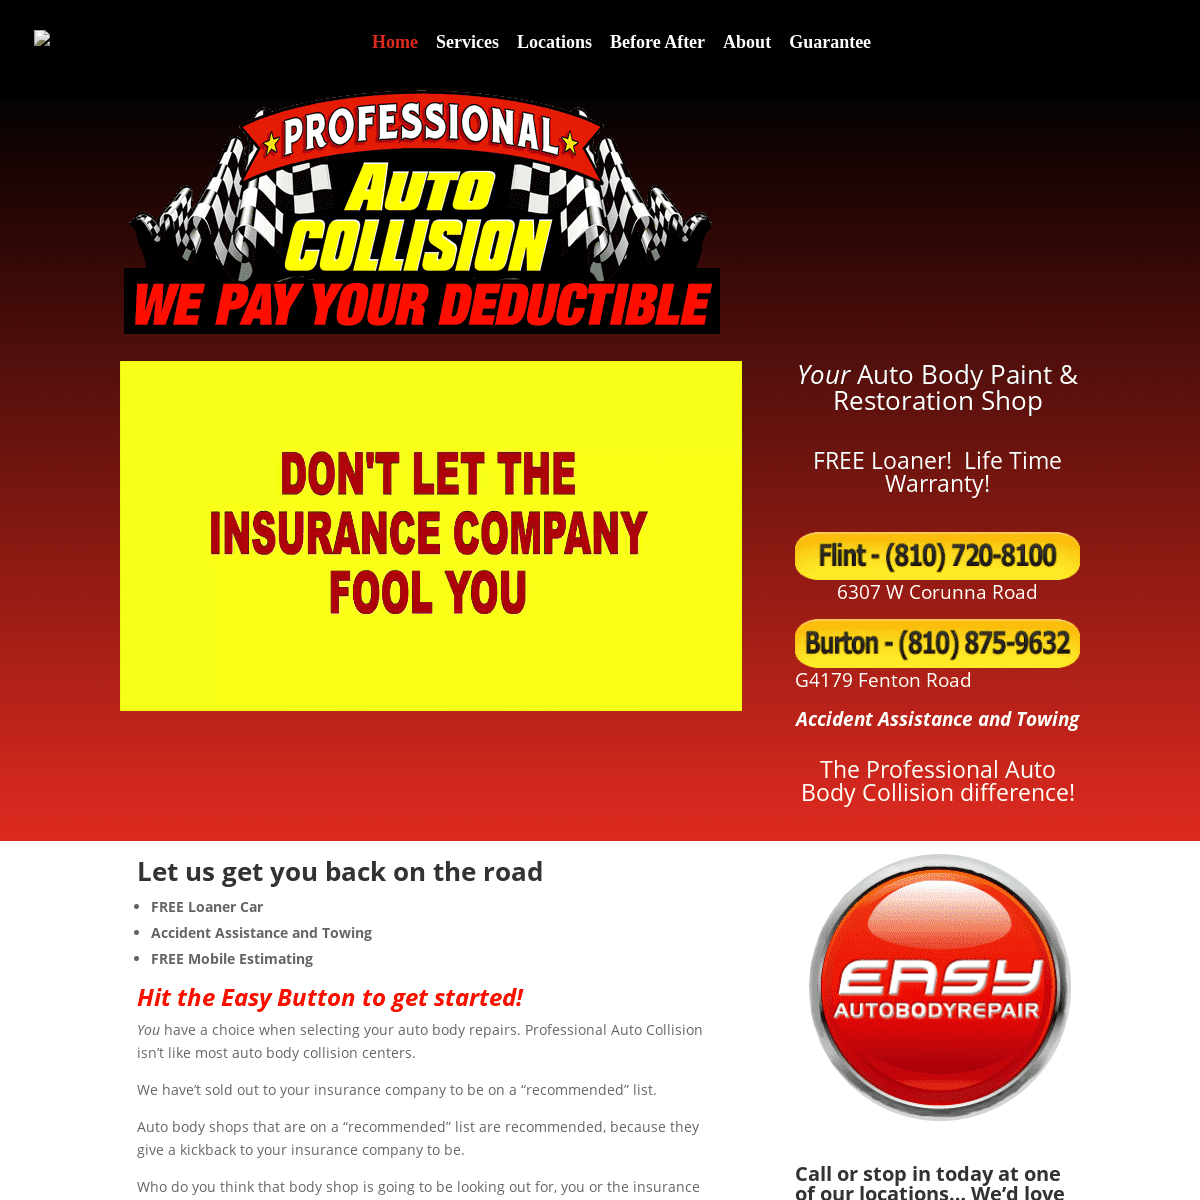 A complete backup of professionalautocollision.com